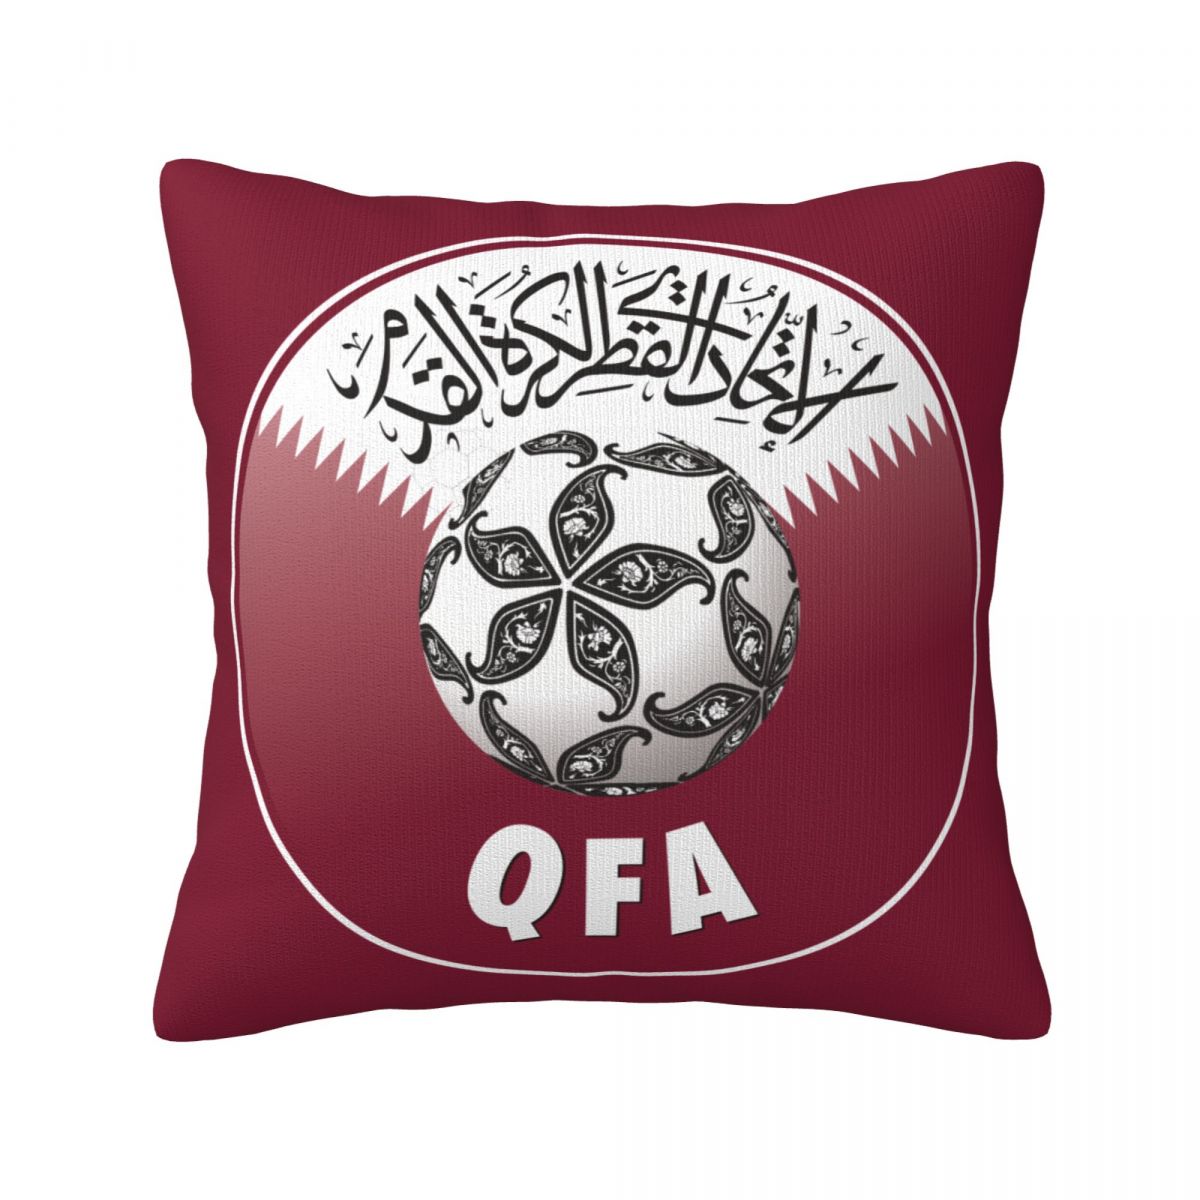 Qatar National Football Team Throw Pillow Covers 18x18